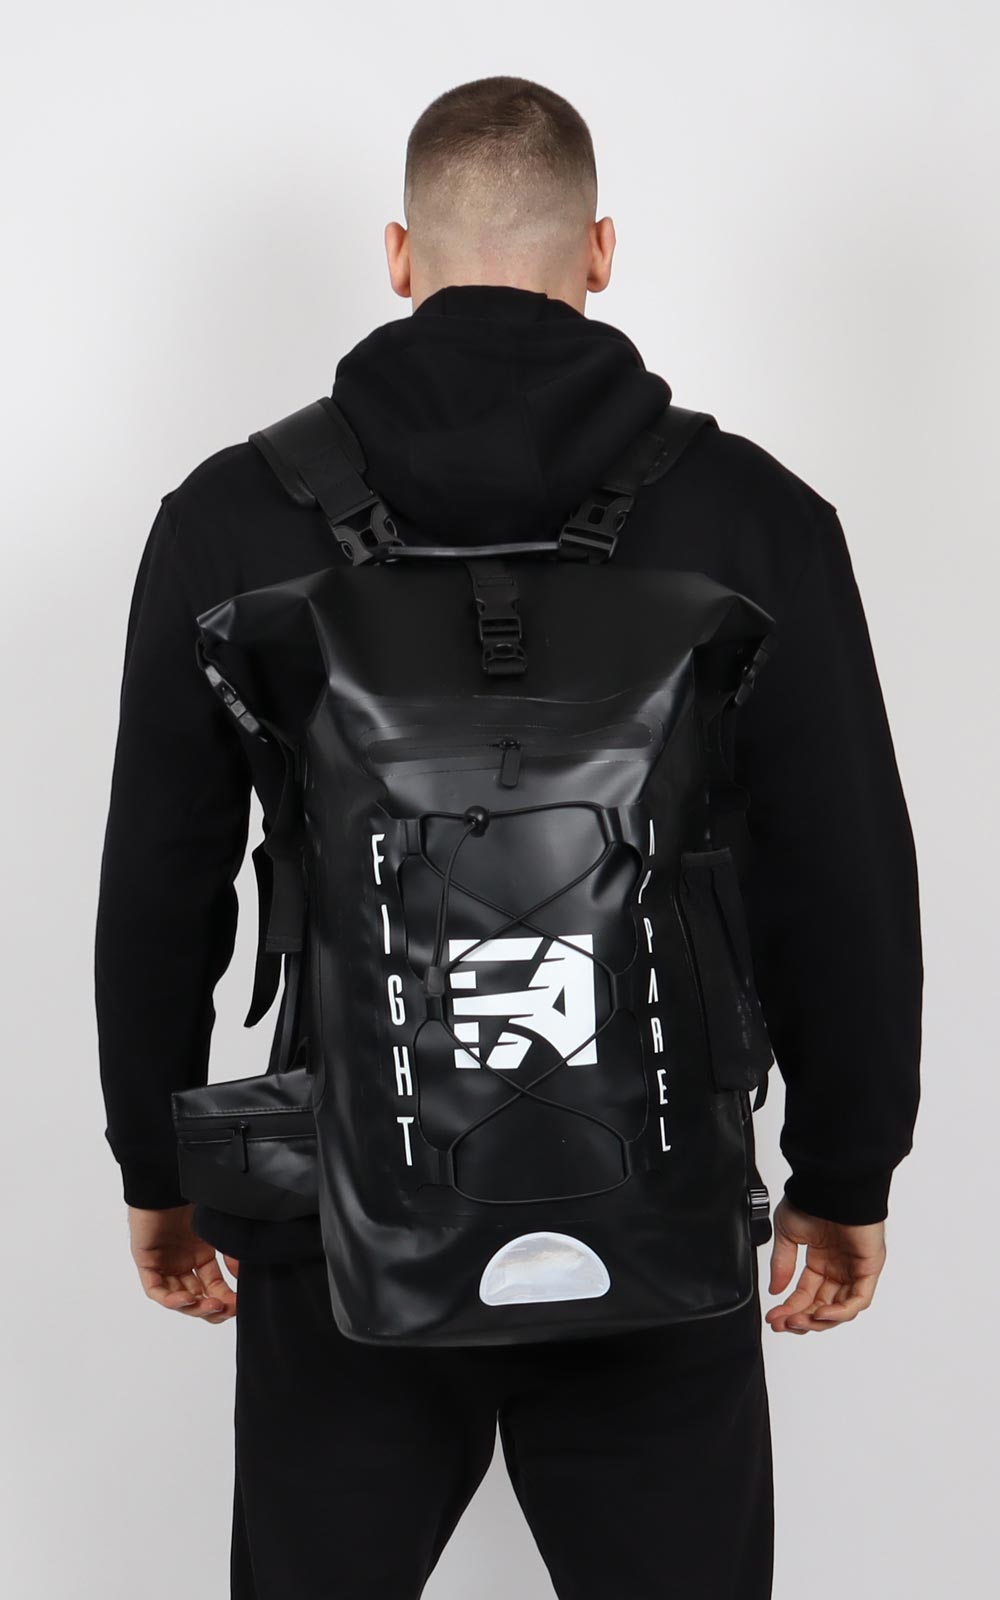 STORM 2.0 - Backpack